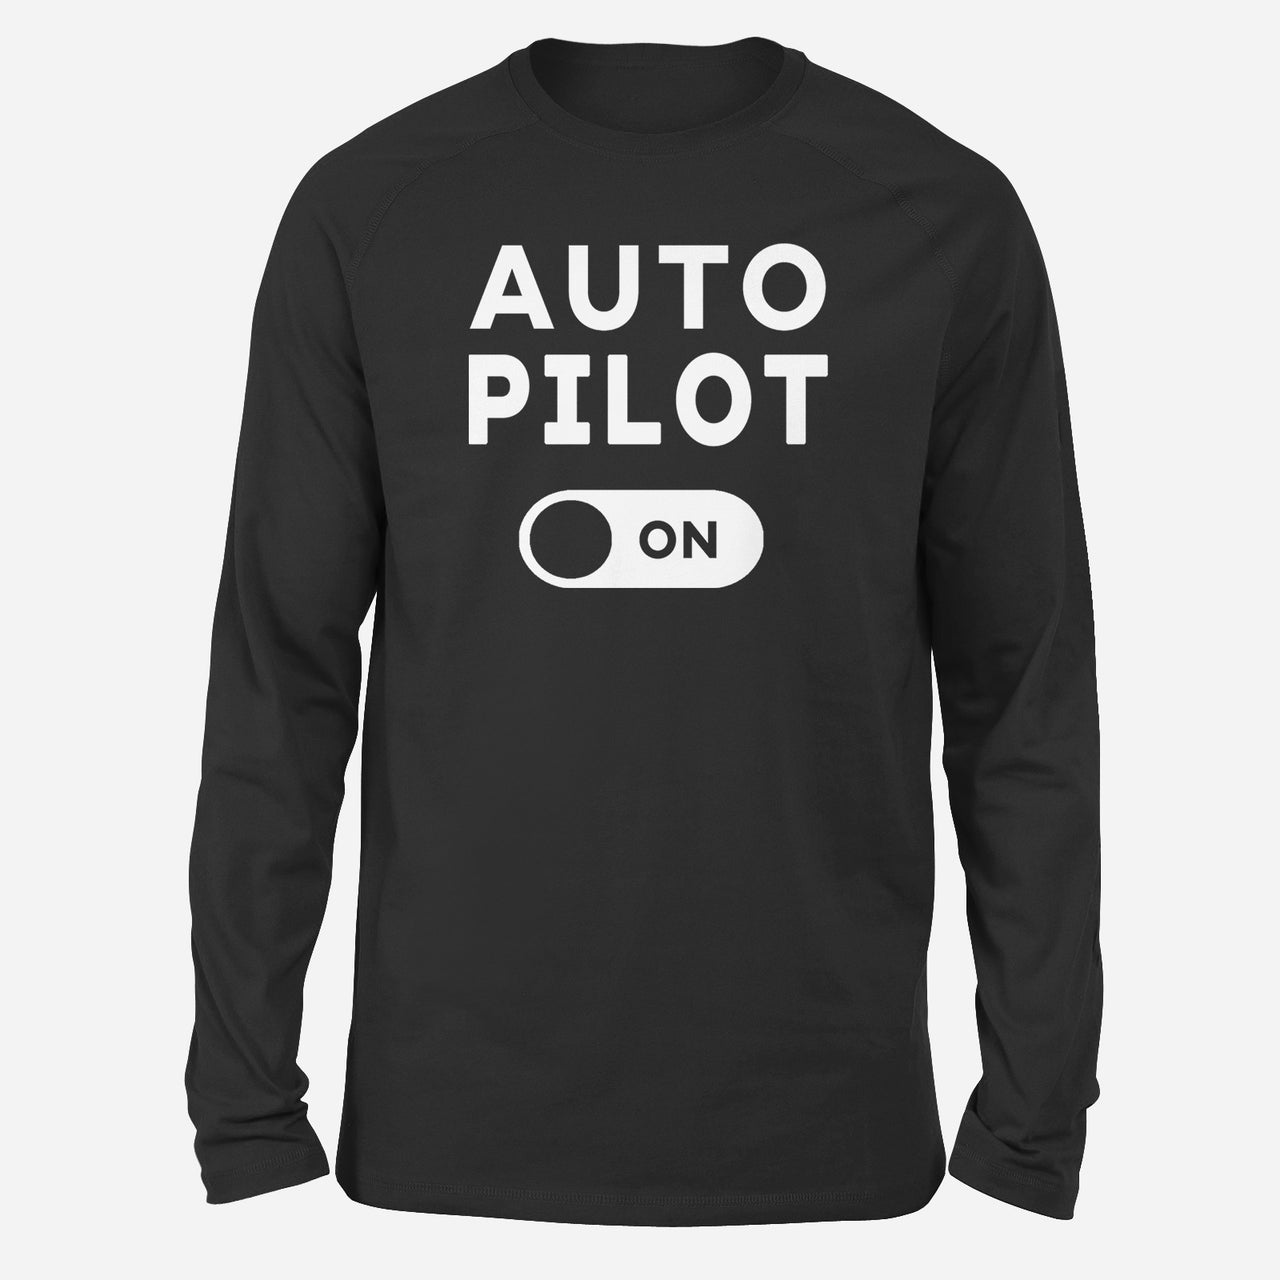 Auto Pilot ON Designed Long-Sleeve T-Shirts